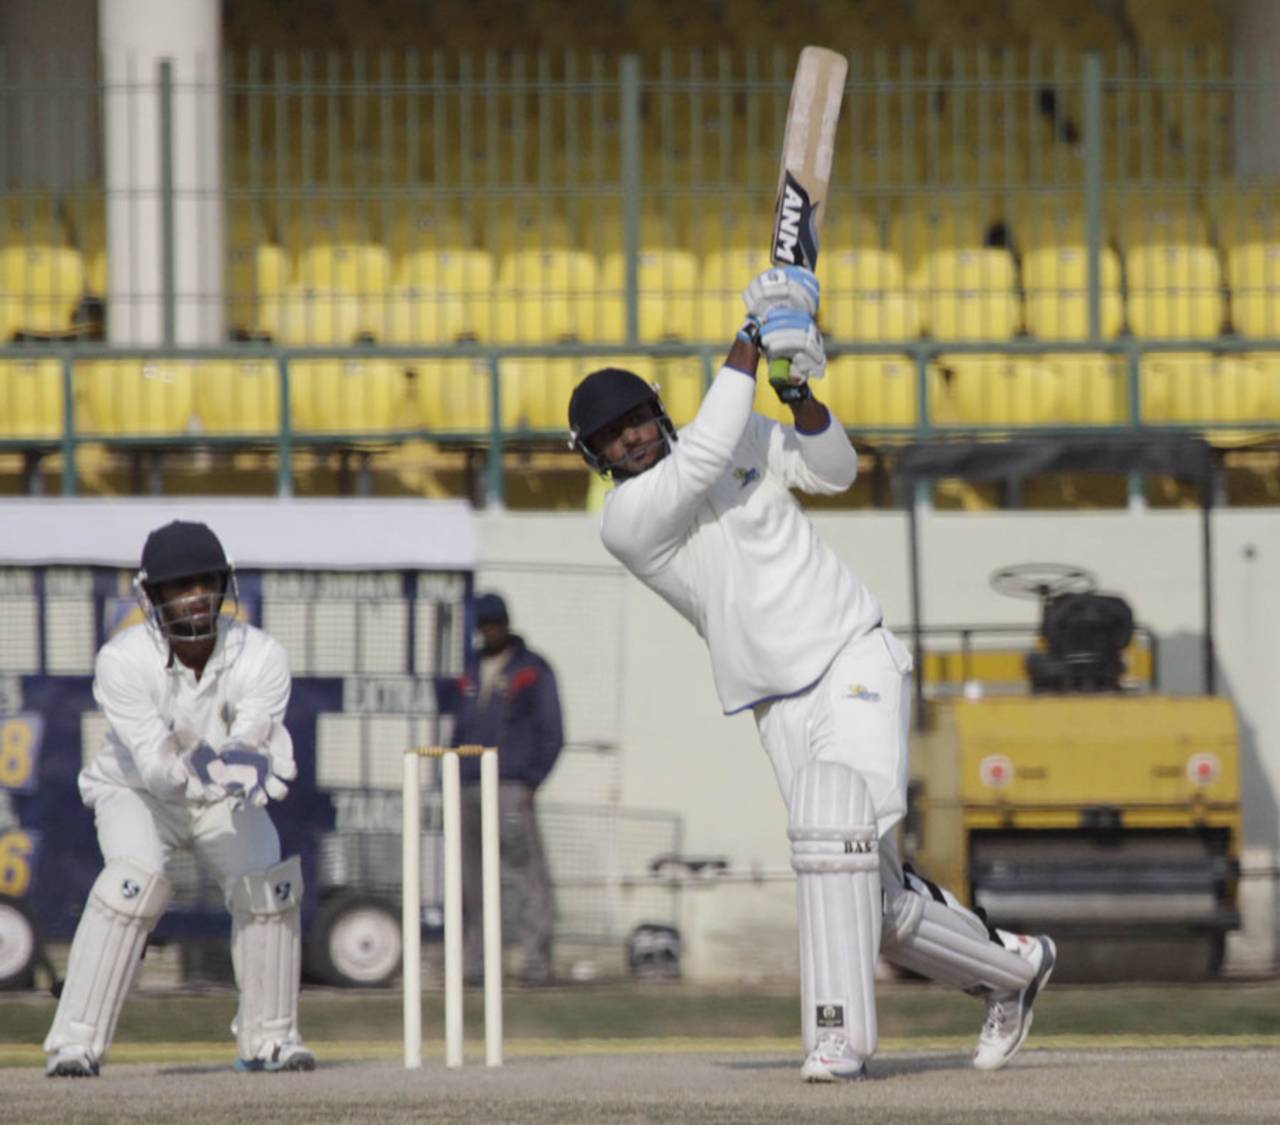 Pankaj Jaiswal slammed 35 off 11 balls with two fours and four sixes for Himachal Pradesh&nbsp;&nbsp;&bull;&nbsp;&nbsp;ESPNcricinfo Ltd